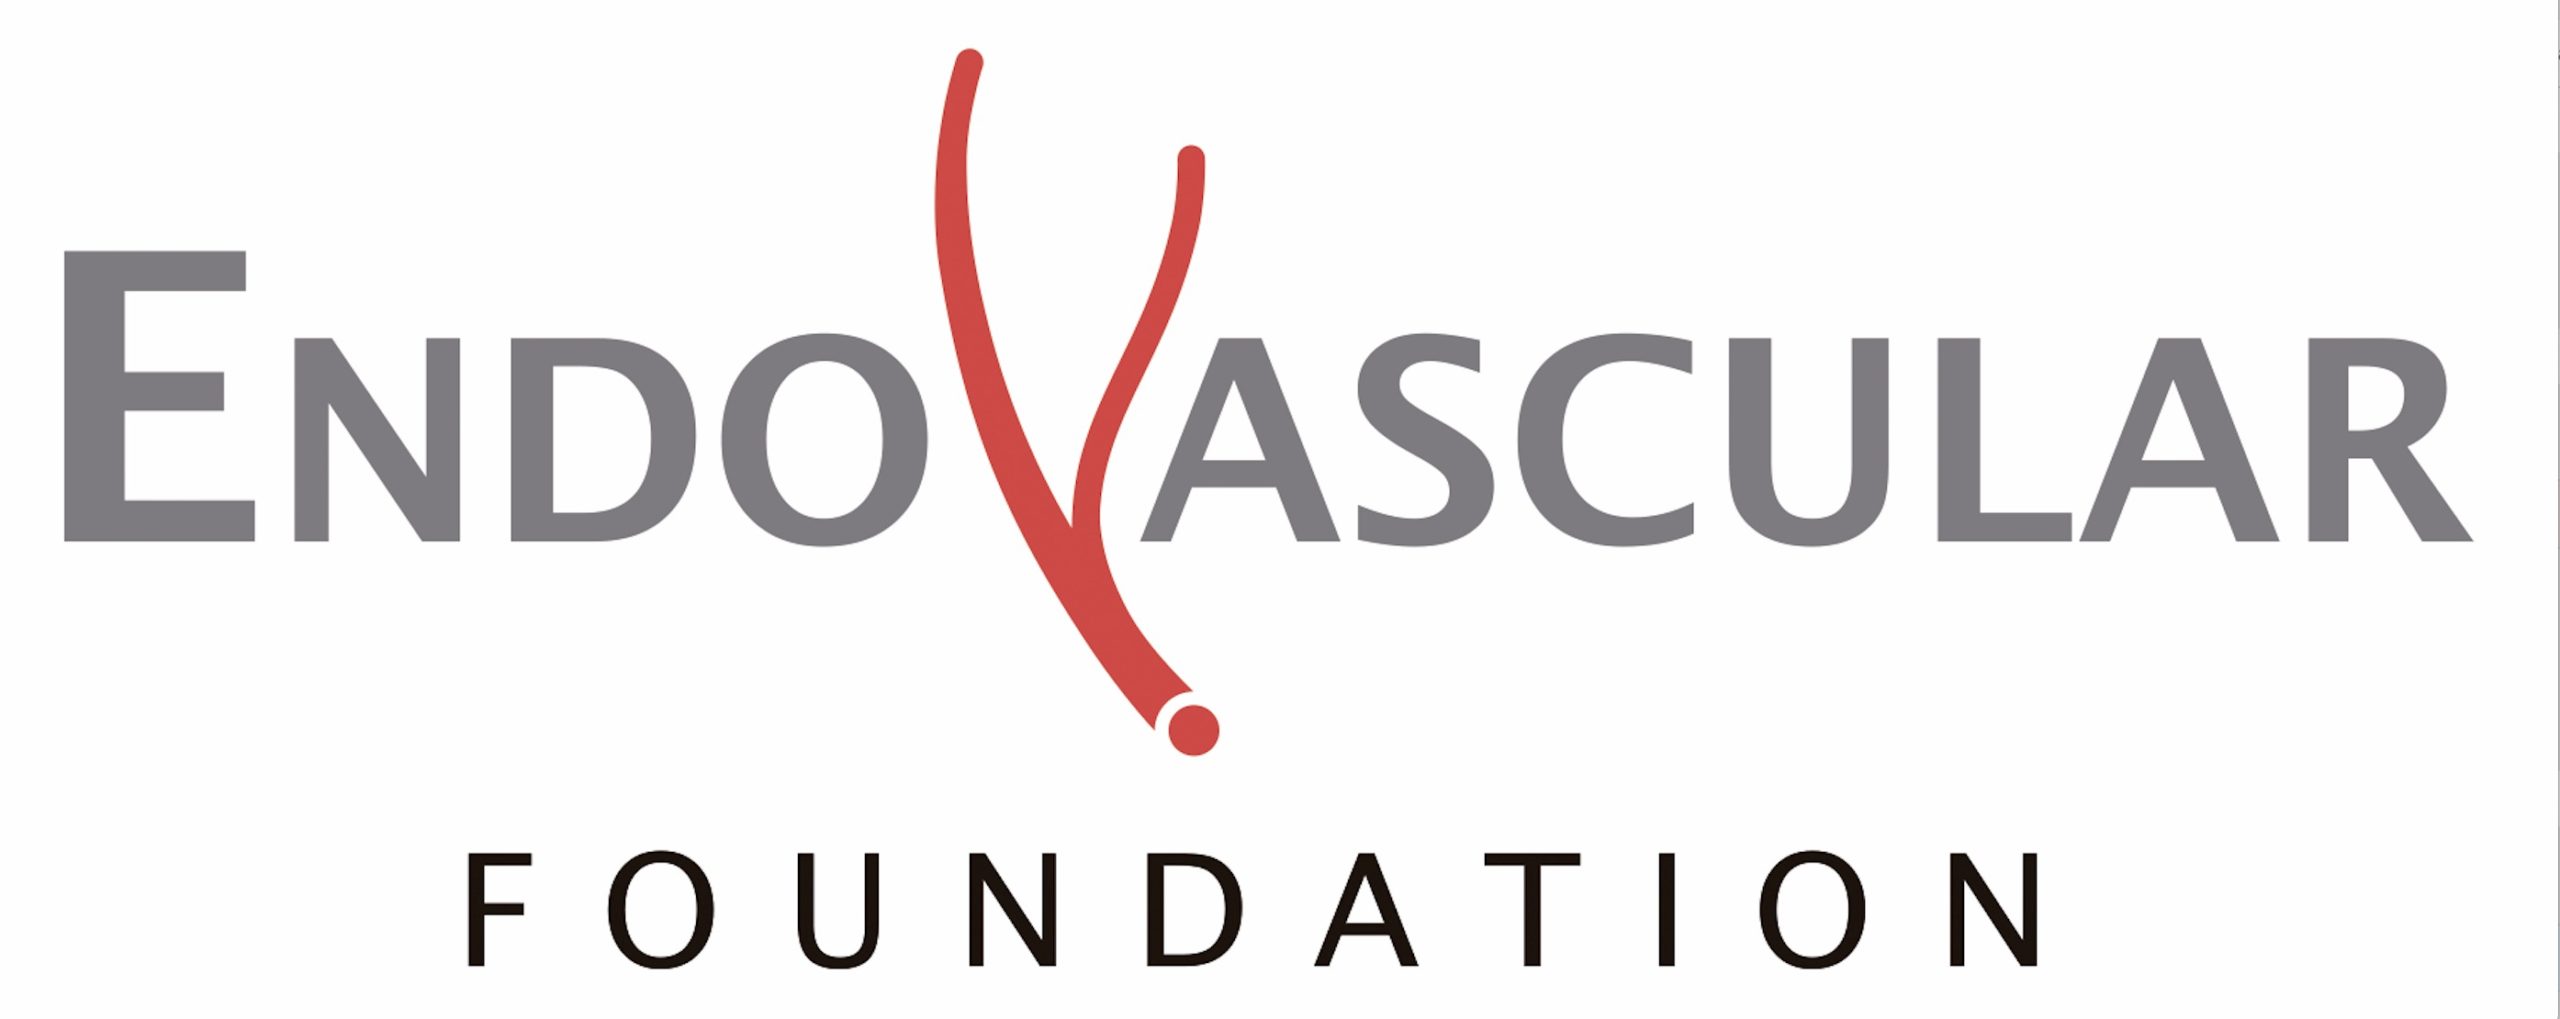 Endovascular Foundation